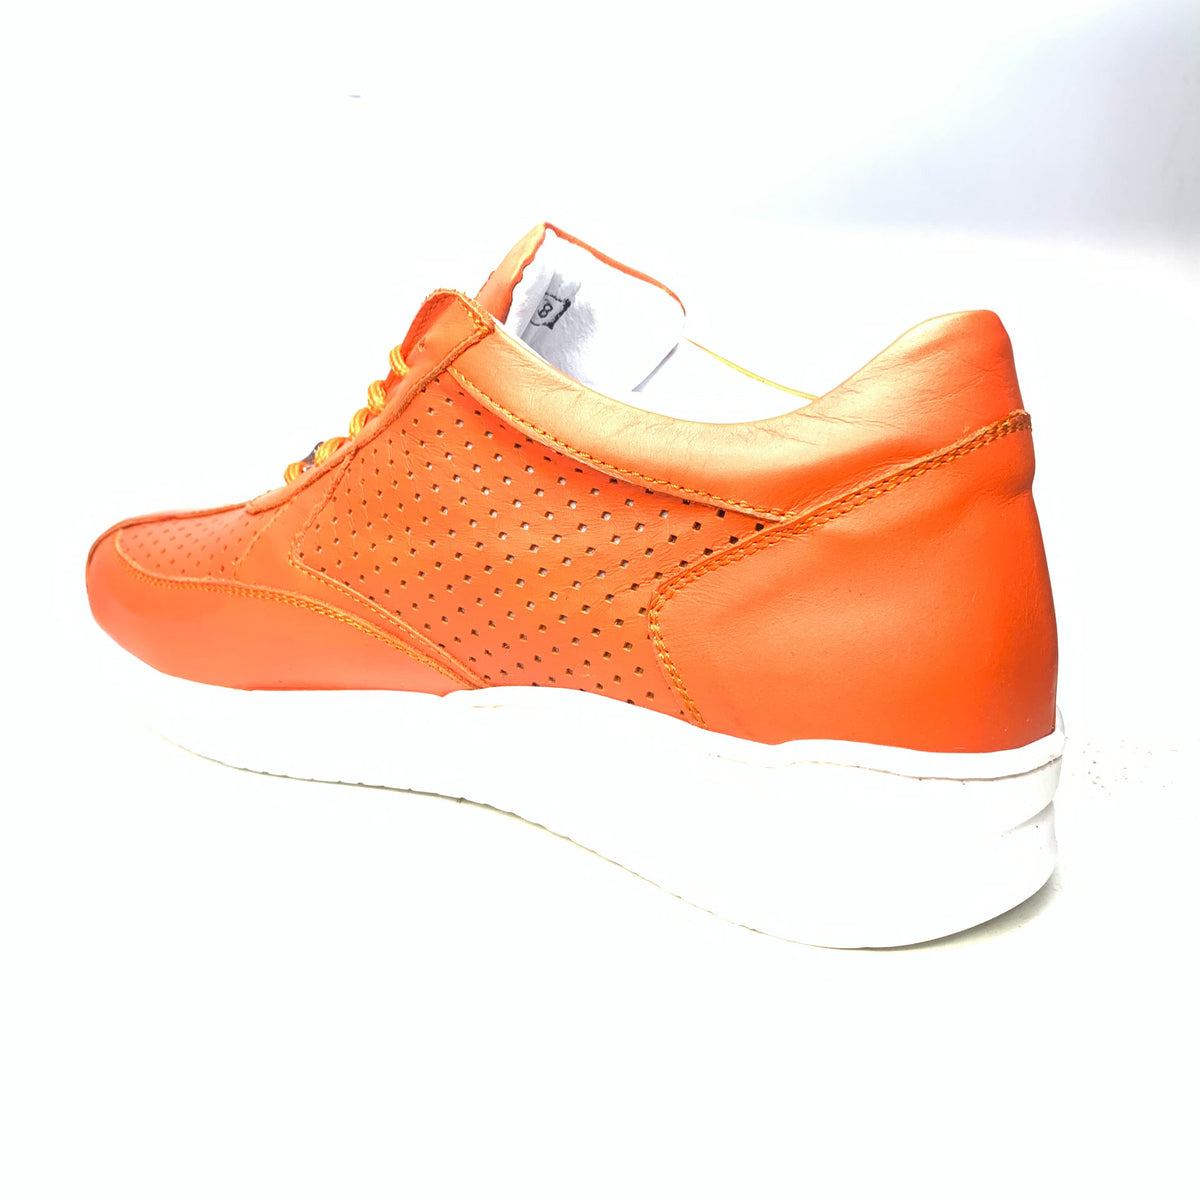 Mauri M770 Orange Arancio Perforated Crocodile Nappa Sneakers - Dudes Boutique